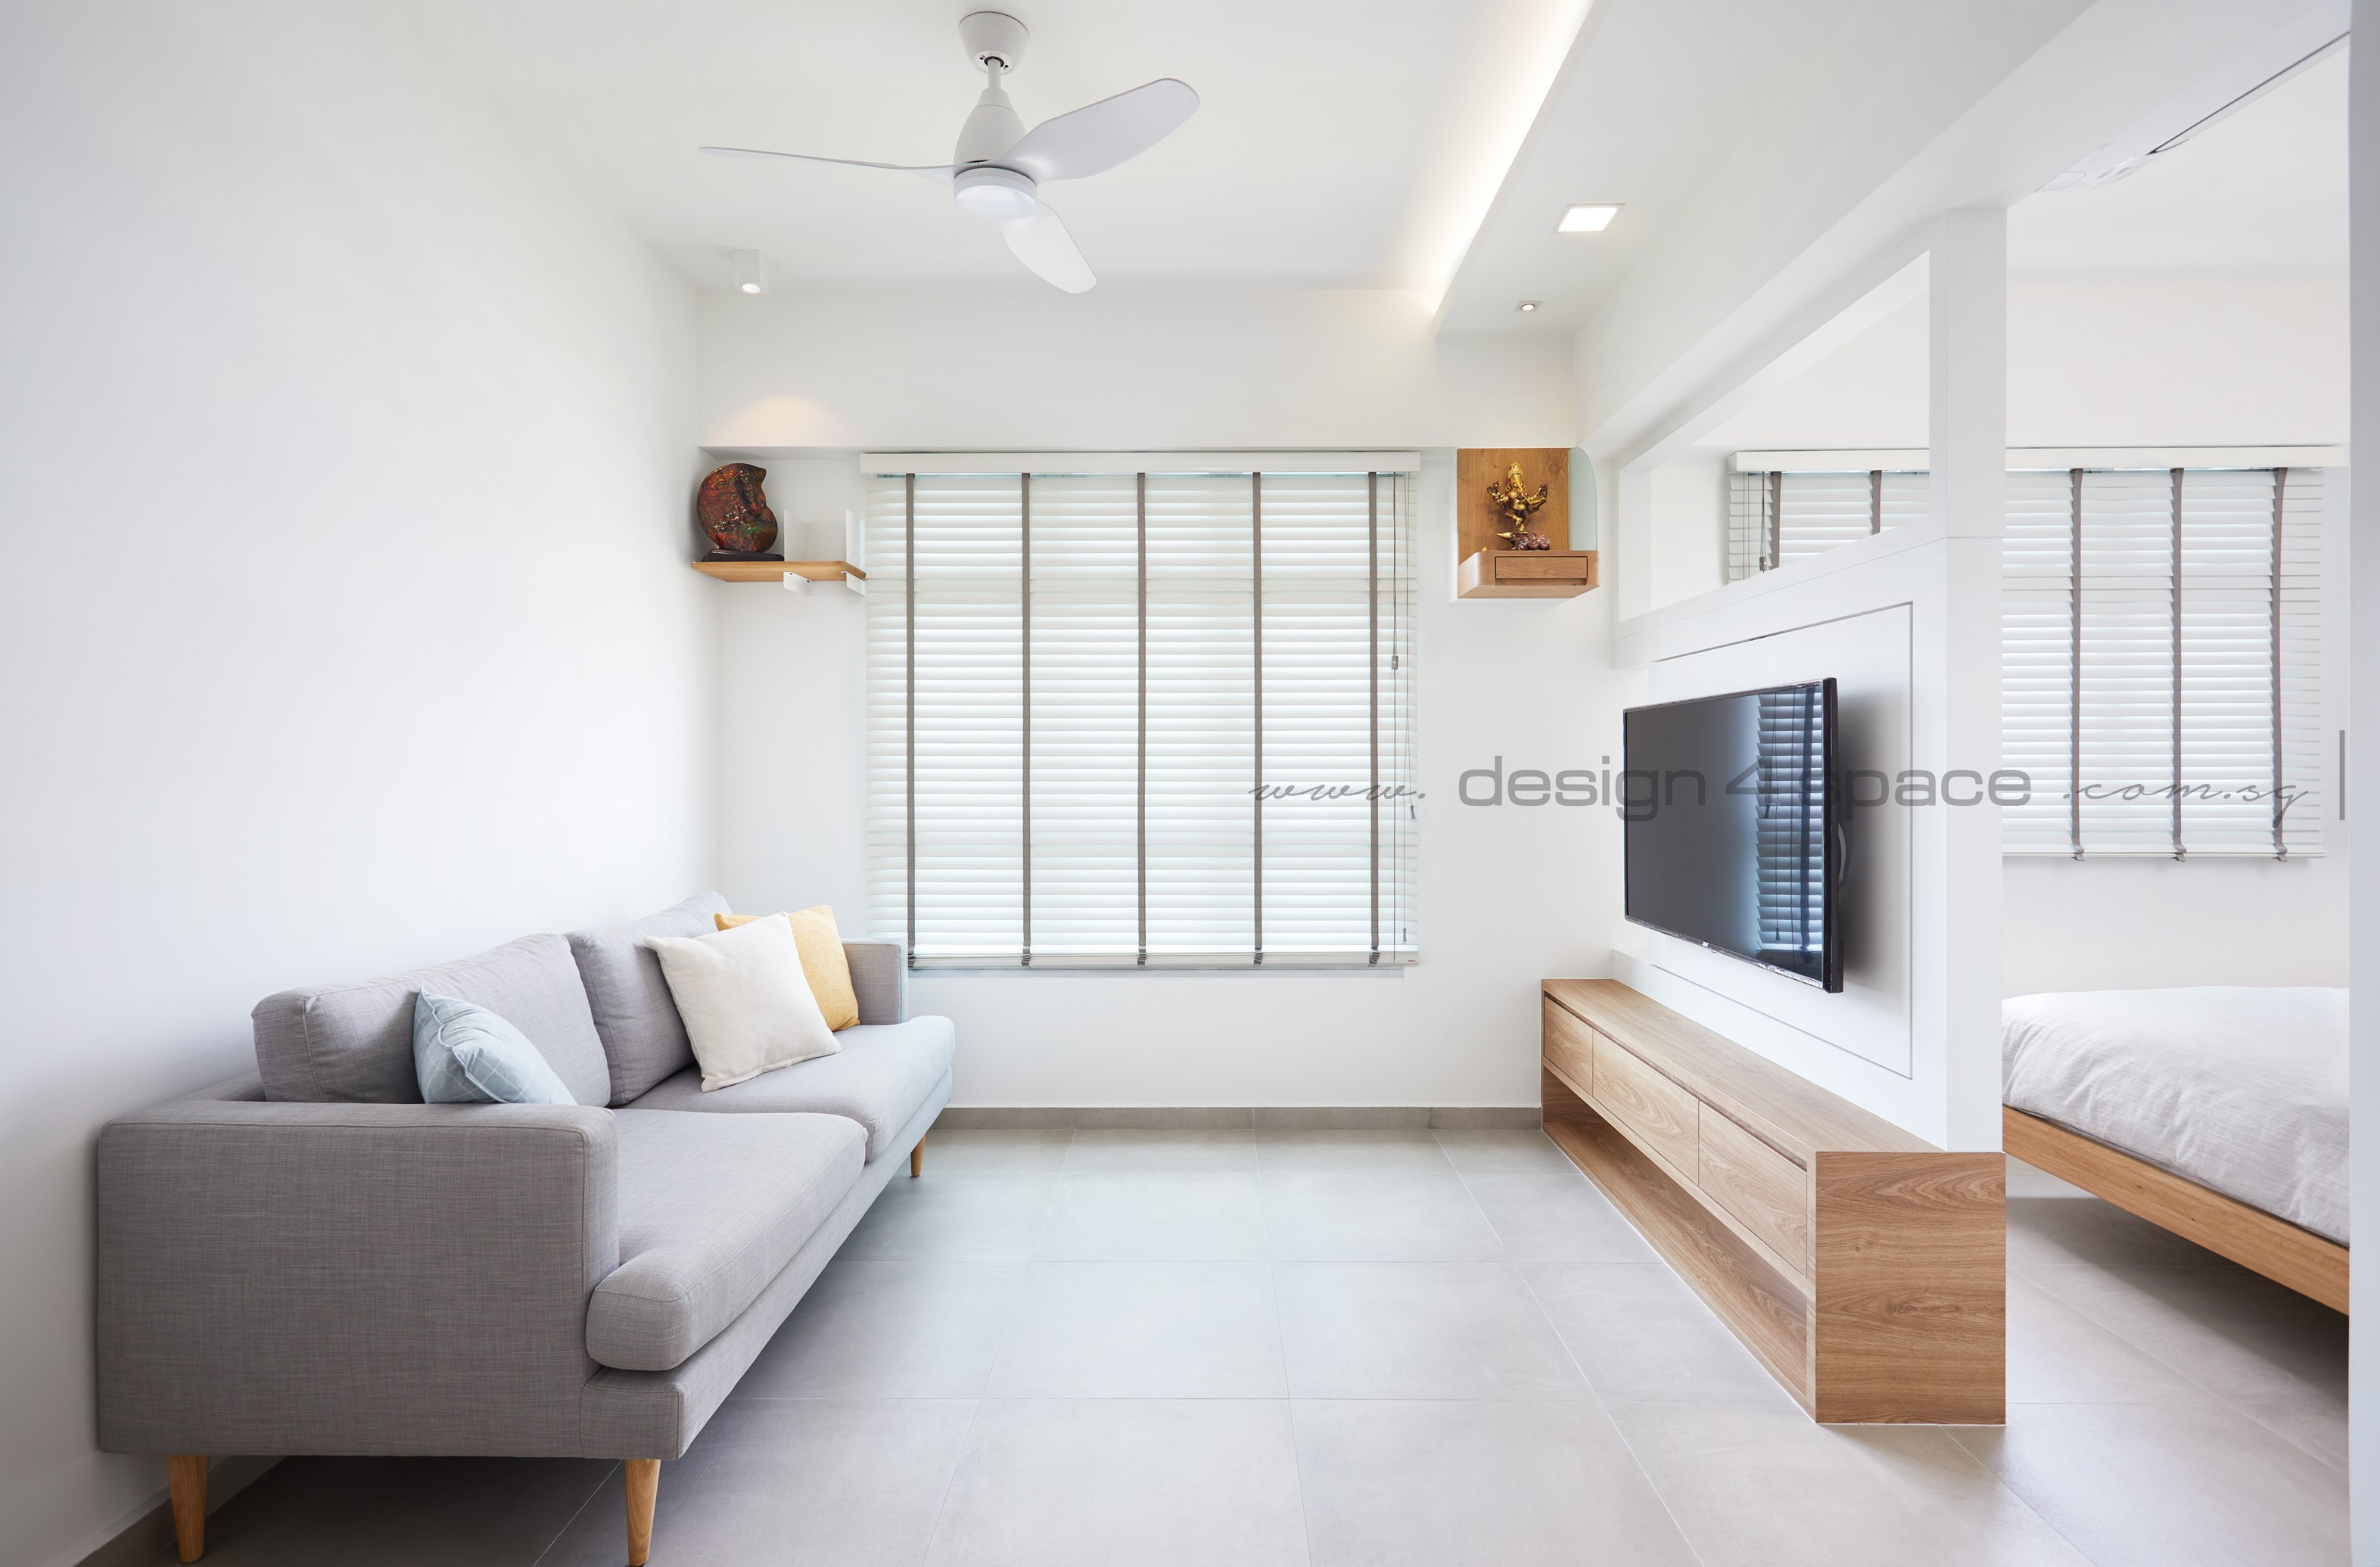 Contemporary Design - Living Room - HDB Studio Apartment - Design by Design 4 Space Pte Ltd